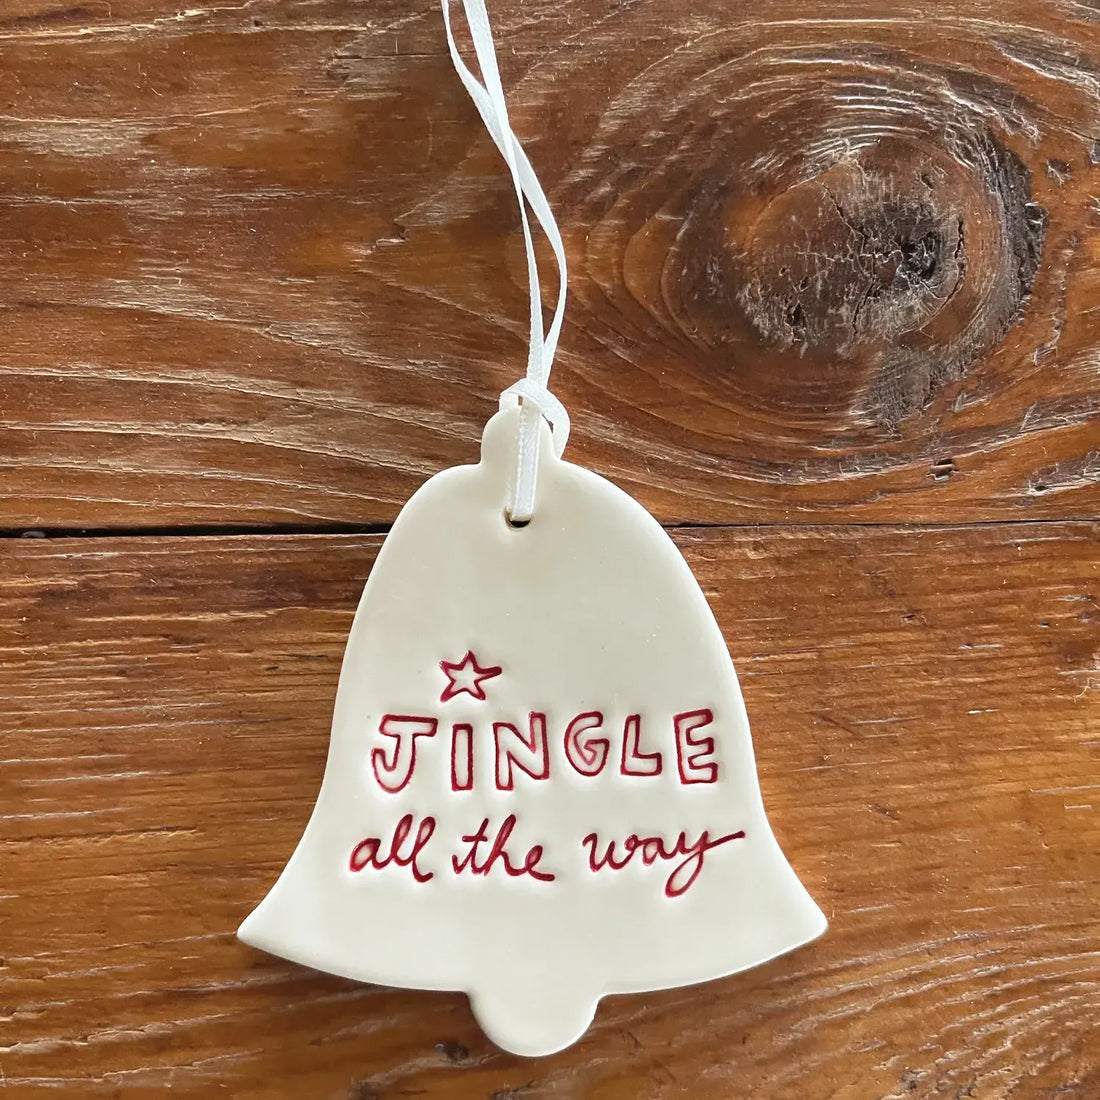 Paper Boat Press - Handmade Clay Christmas Ornament - Jingle All The Way